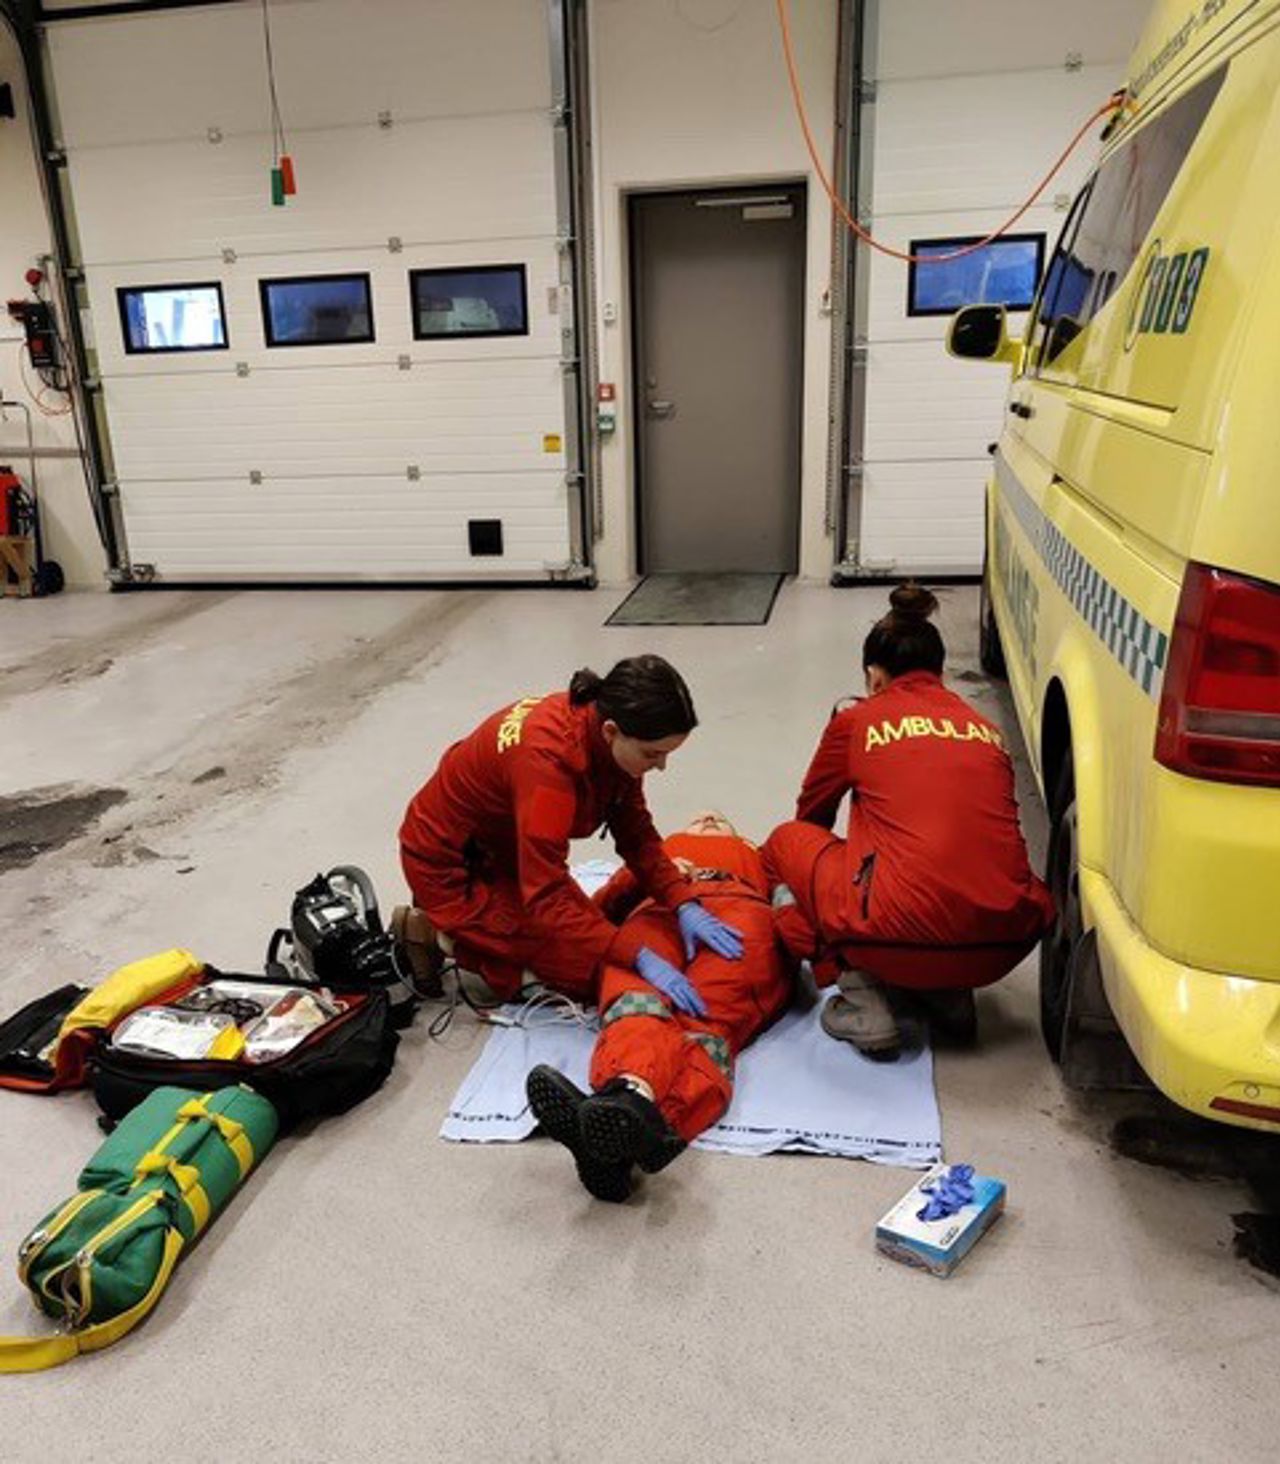 Bilete viser to personar som sit med ein pasient ved sida av ein ambulanse